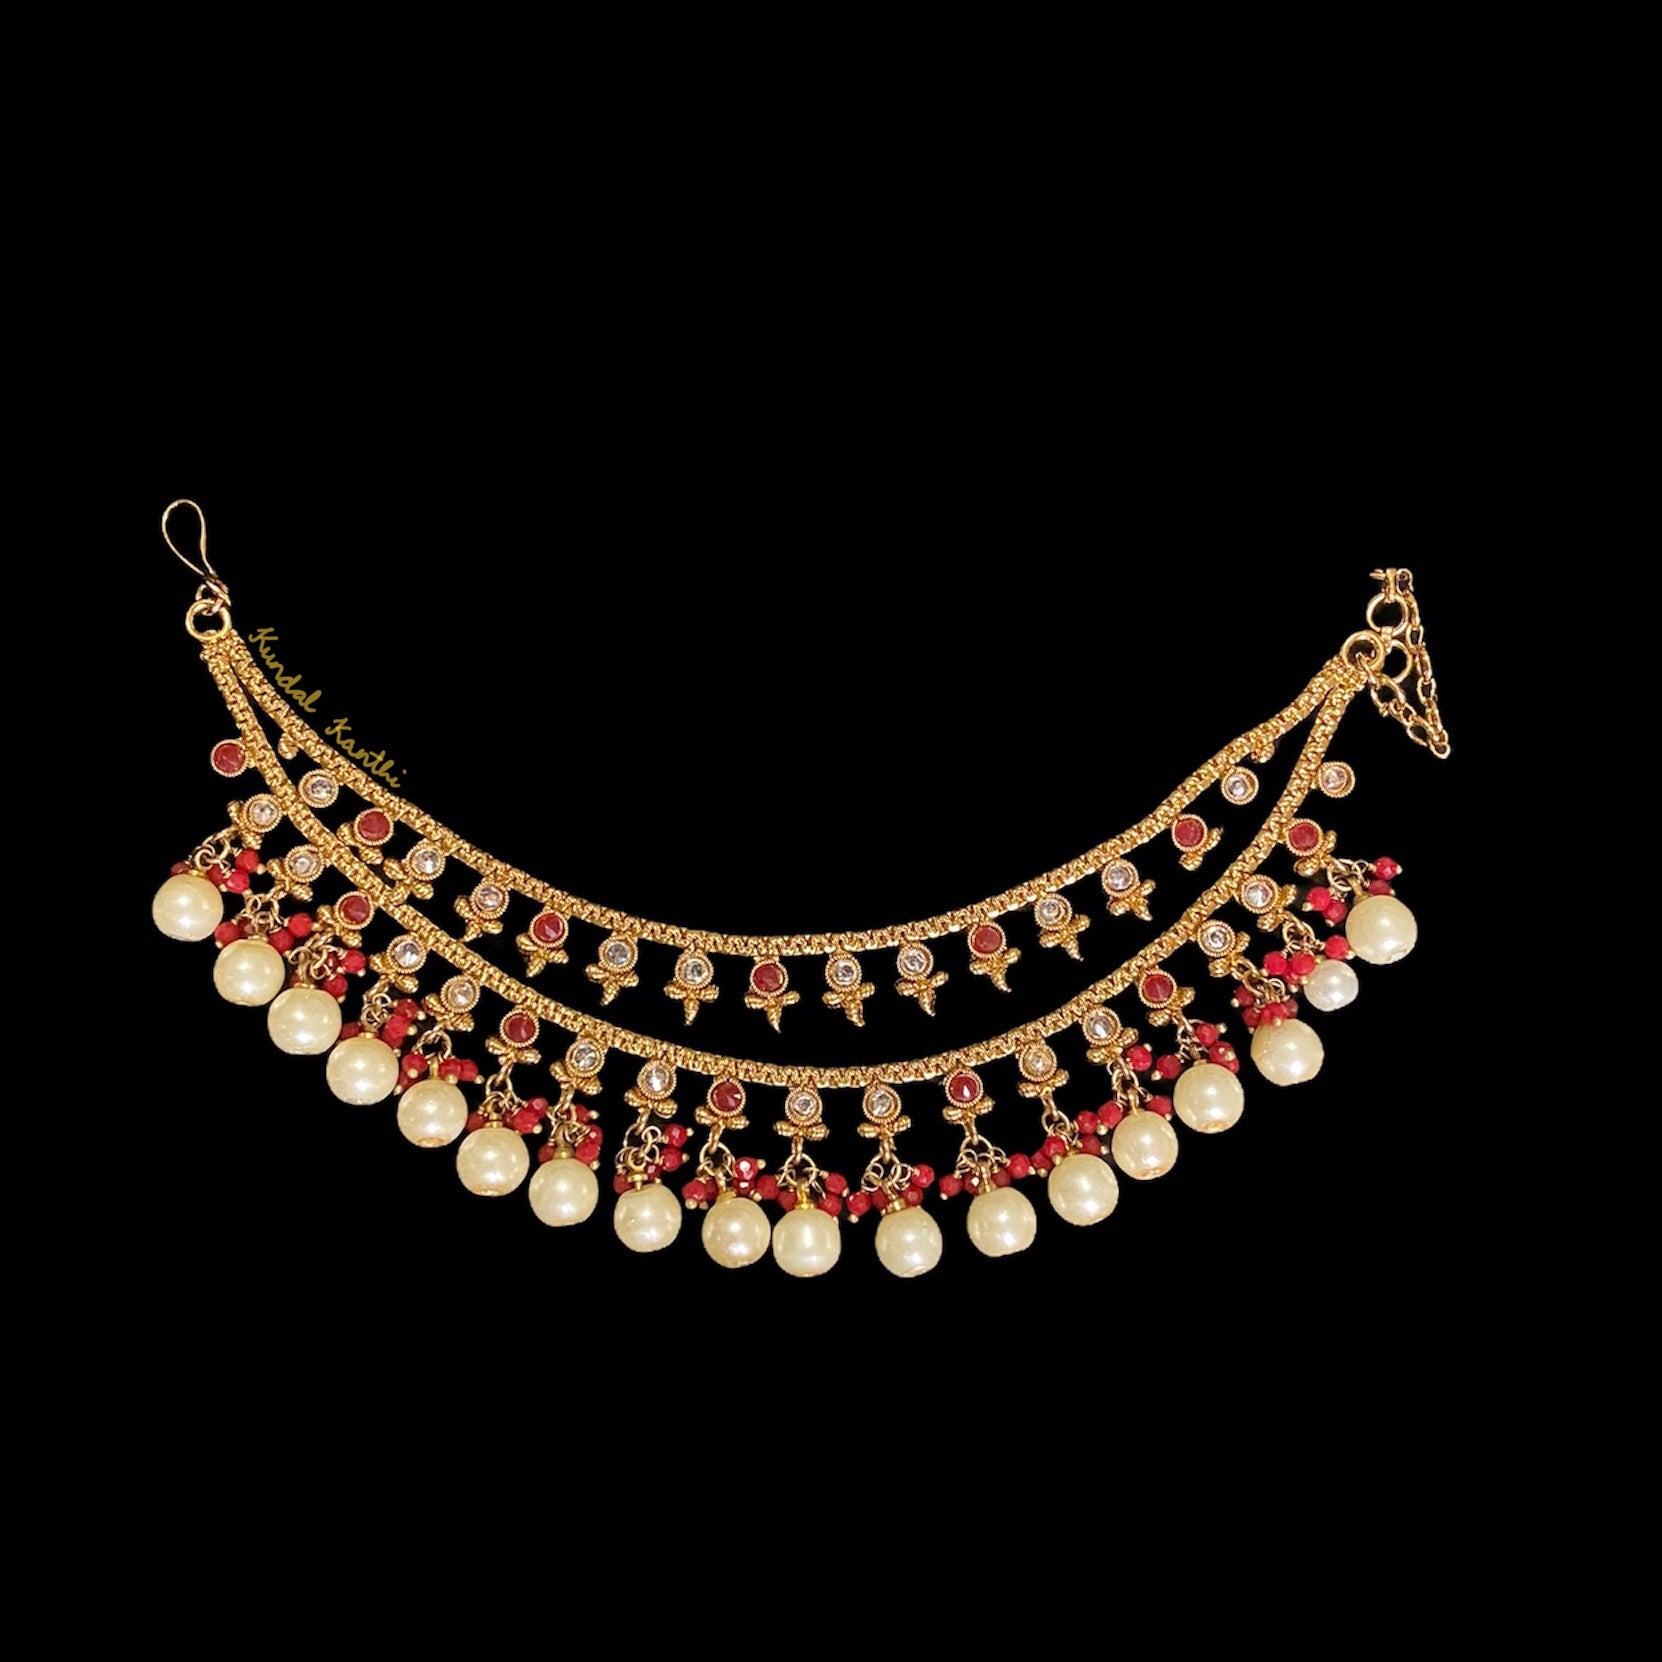 Punjabi Jewelry Empire - Polki earrings with Sahare and tikka  #punjabi_jewelry_empire ✨✨✨✨✨✨✨✨✨✨✨✨✨✨✨✨ For inquiries contact us: DM  WhatsApp/Text: 925-206-7281 Email: punjabijewelryempire@gmail.com  ————————————————————— Feel free to ...